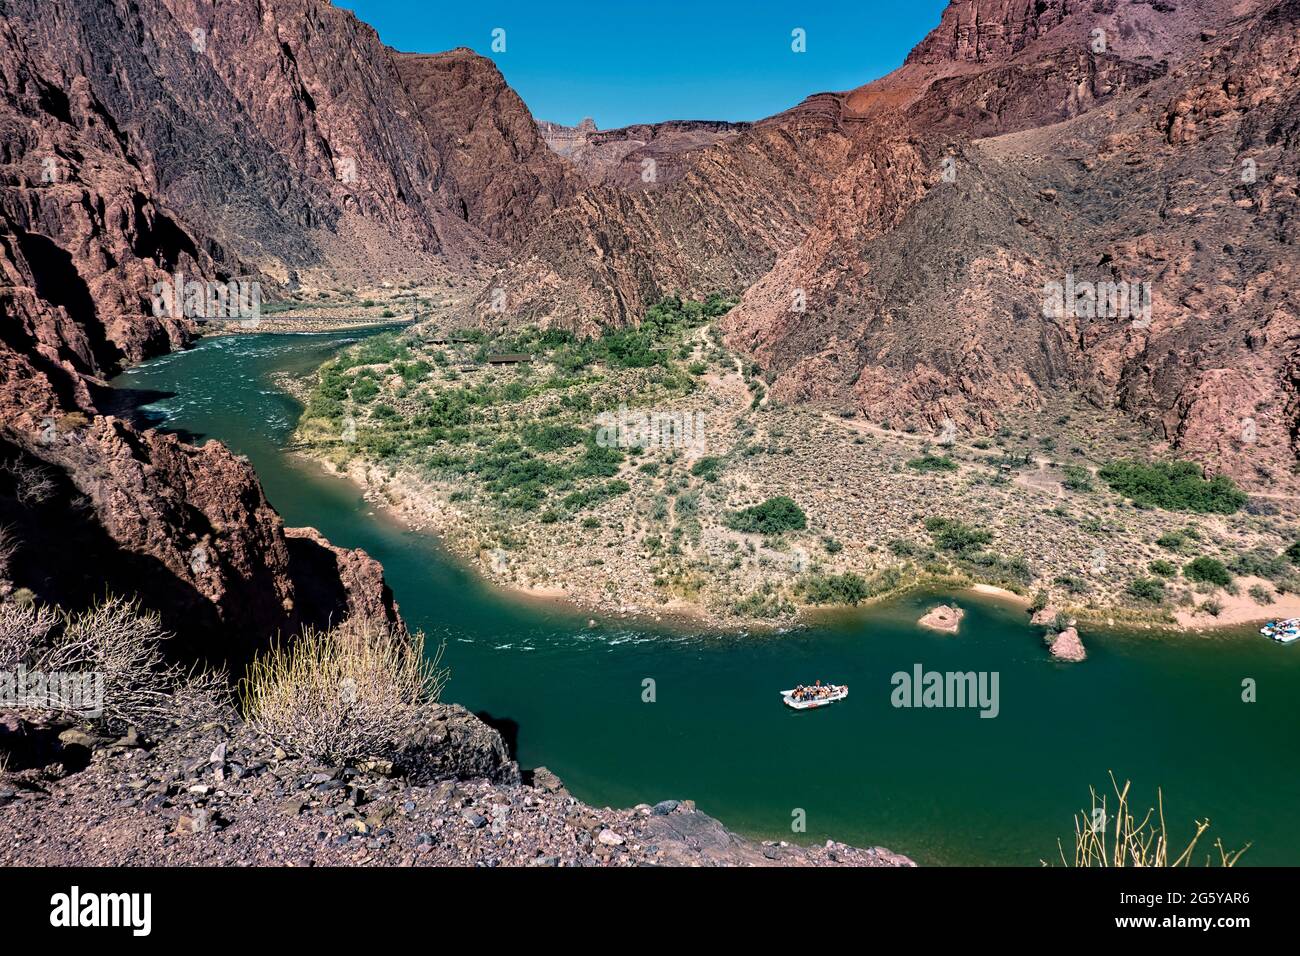 Raft on the Colorado River, Grand Canyon National Park, Arizona, U.S.A Stock Photo